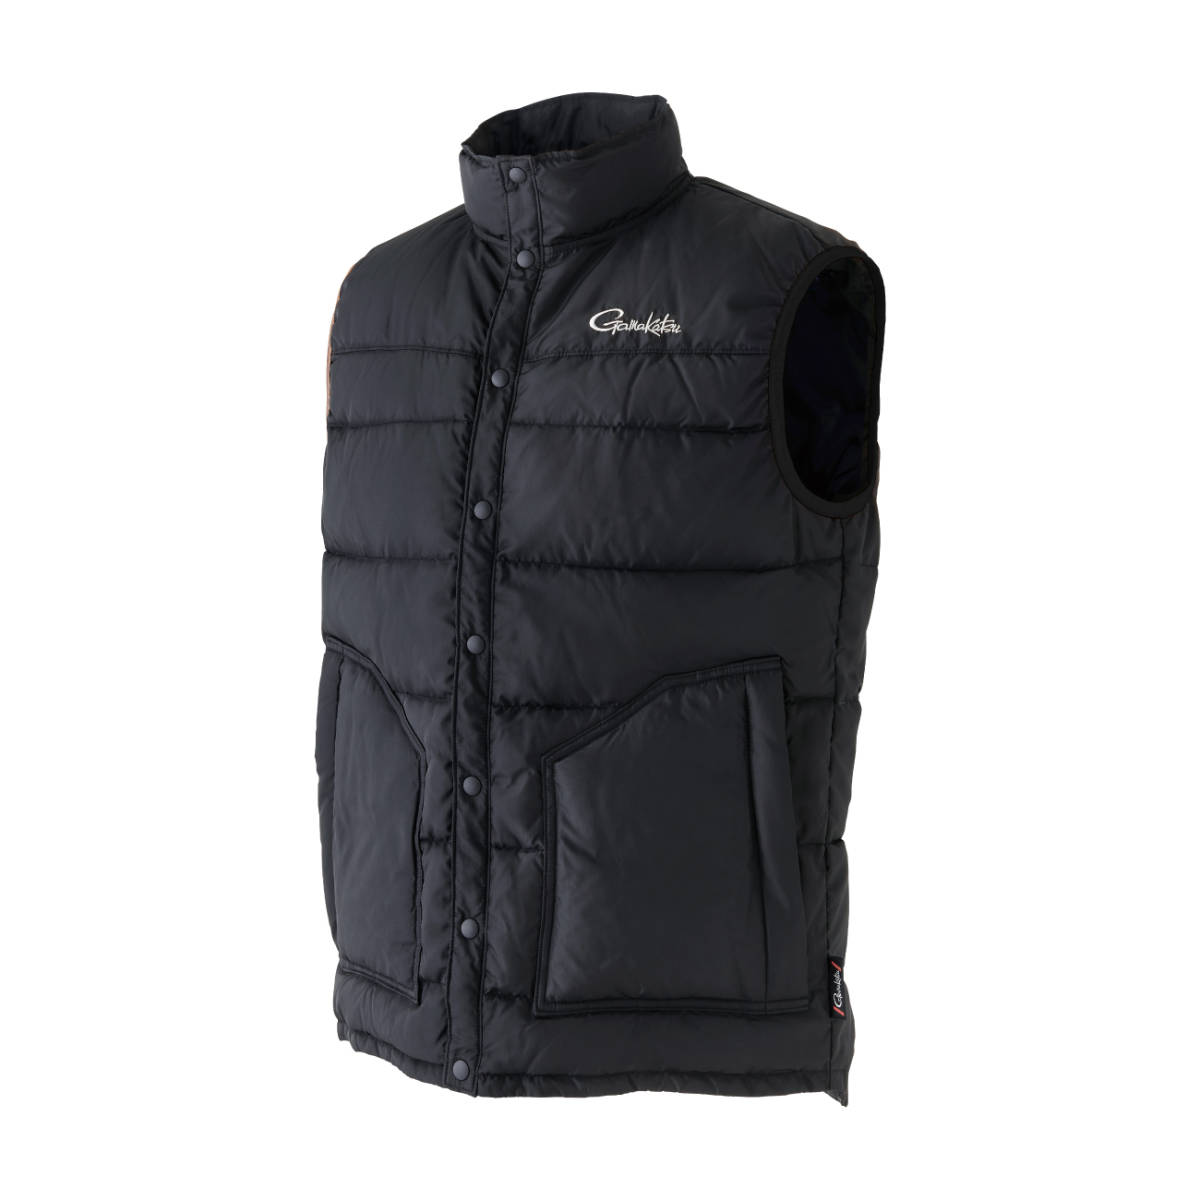  Gamakatsu light down vest GM3724* black black /3L size 